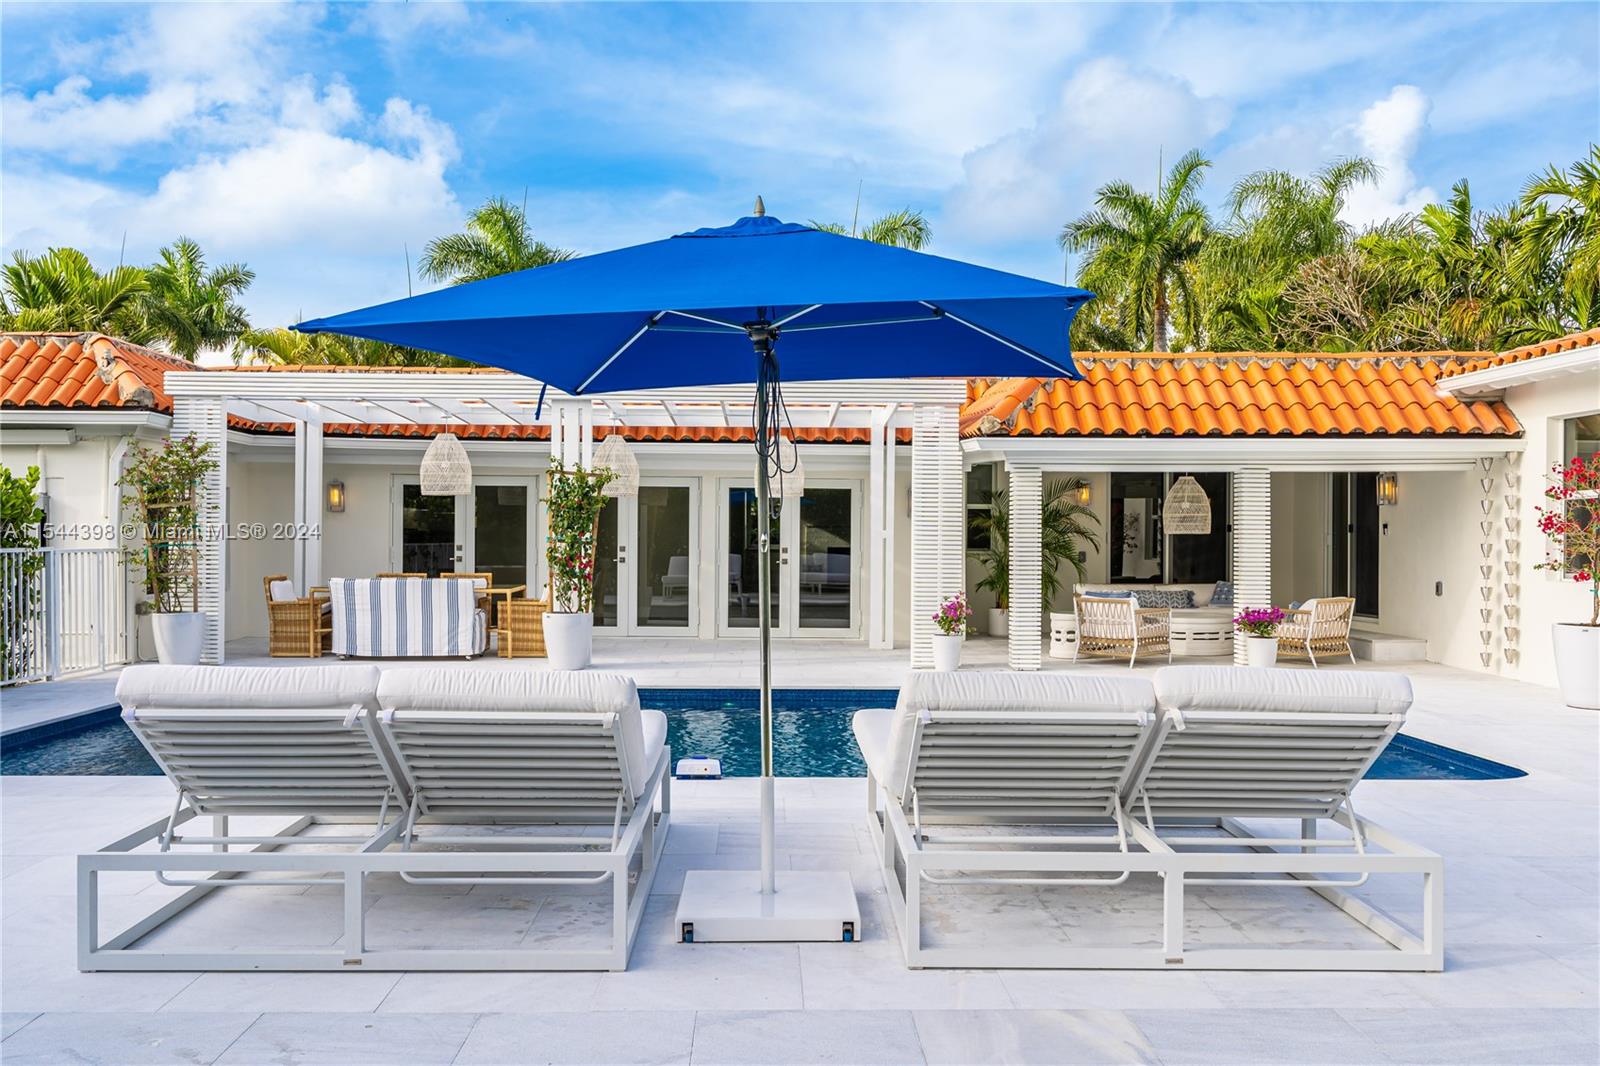 Property for Sale at 822 Ne 96th St, Miami Shores, Miami-Dade County, Florida - Bedrooms: 4 
Bathrooms: 4  - $2,850,000